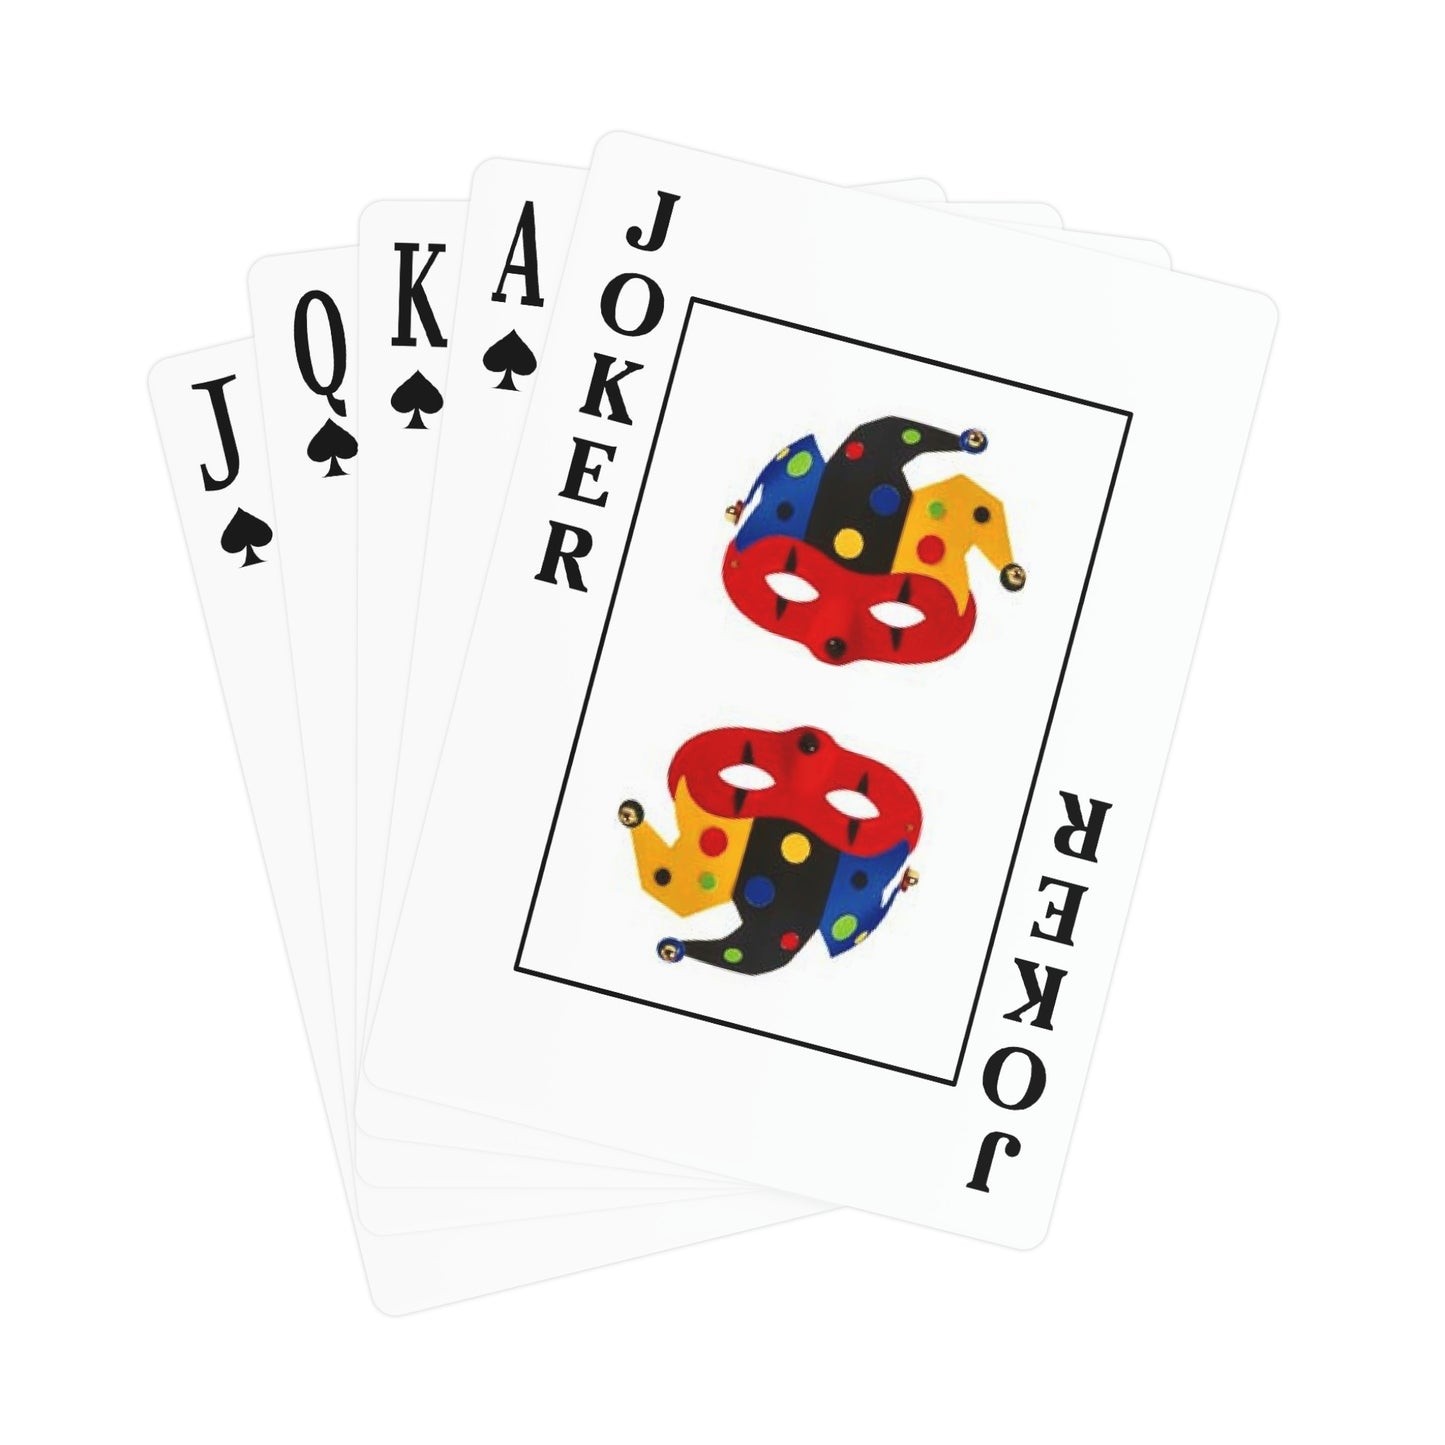 Portal Rift - Playing Cards